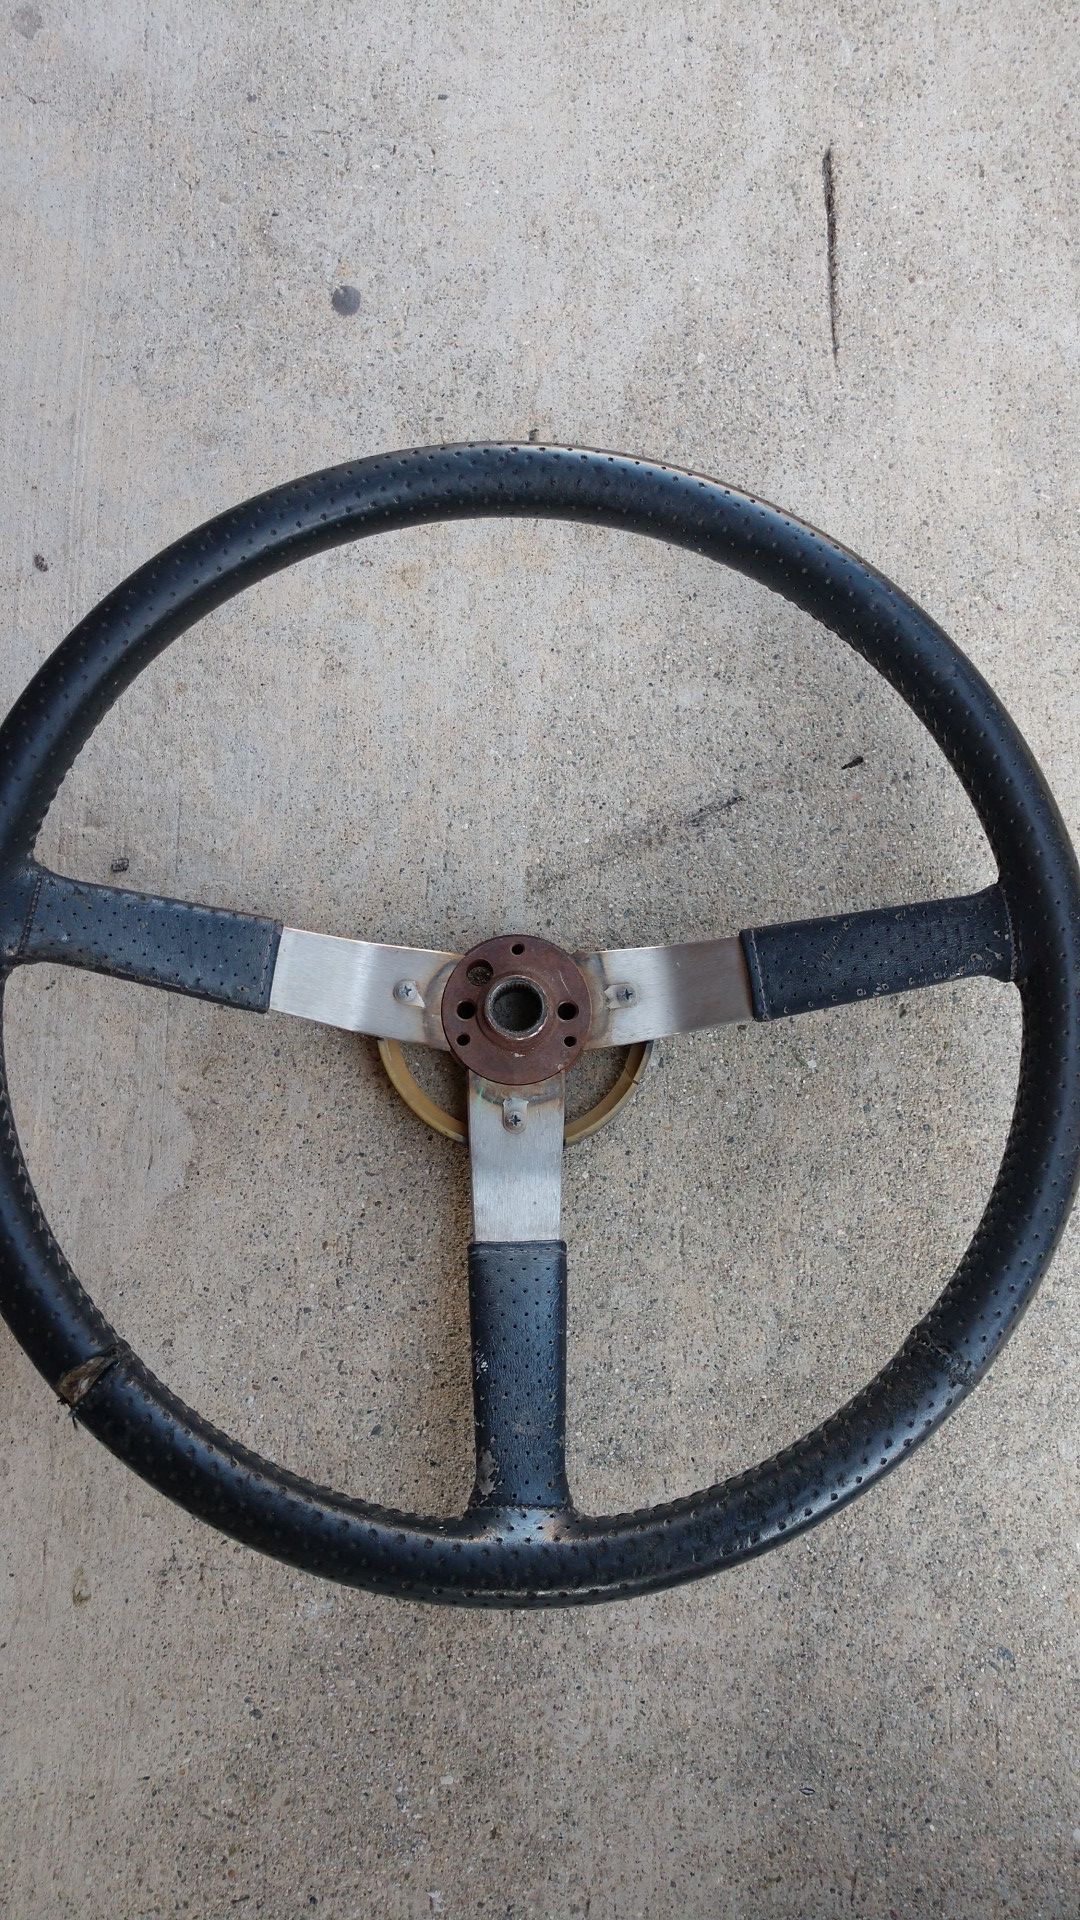 Jeep Wrangler steering wheel